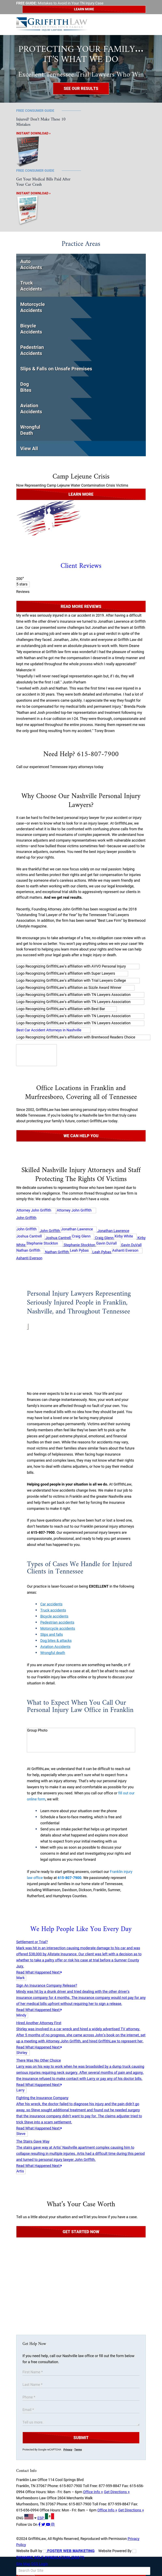 GriffithLaw - Franklin TN Lawyers